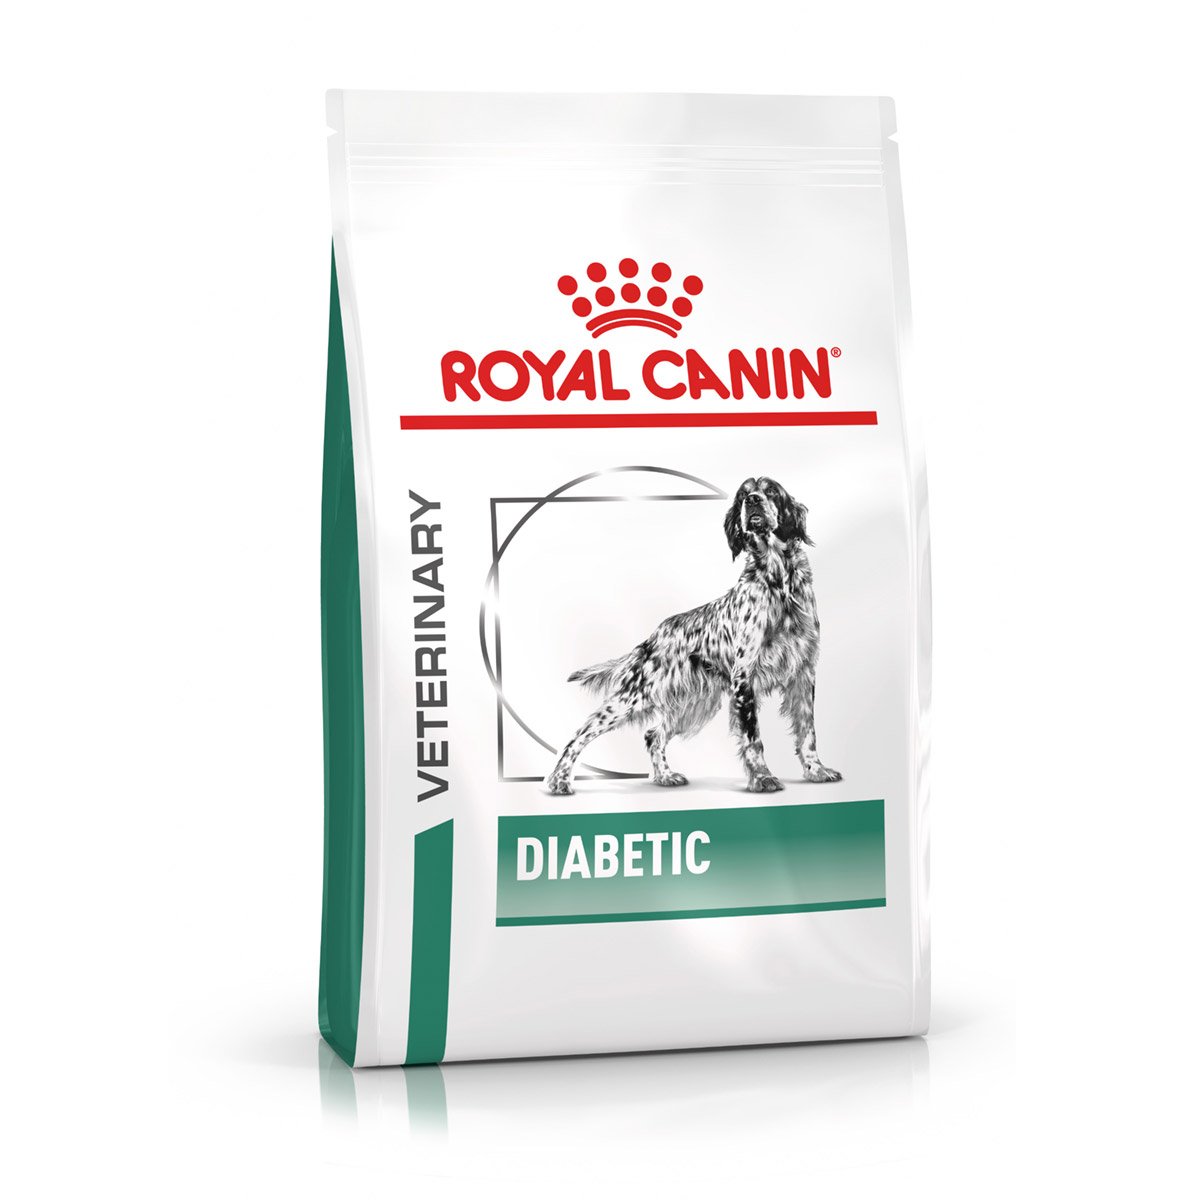 ROYAL CANIN® Veterinary DIABETIC Trockenfutter für Hunde 1,5kg von Royal Canin